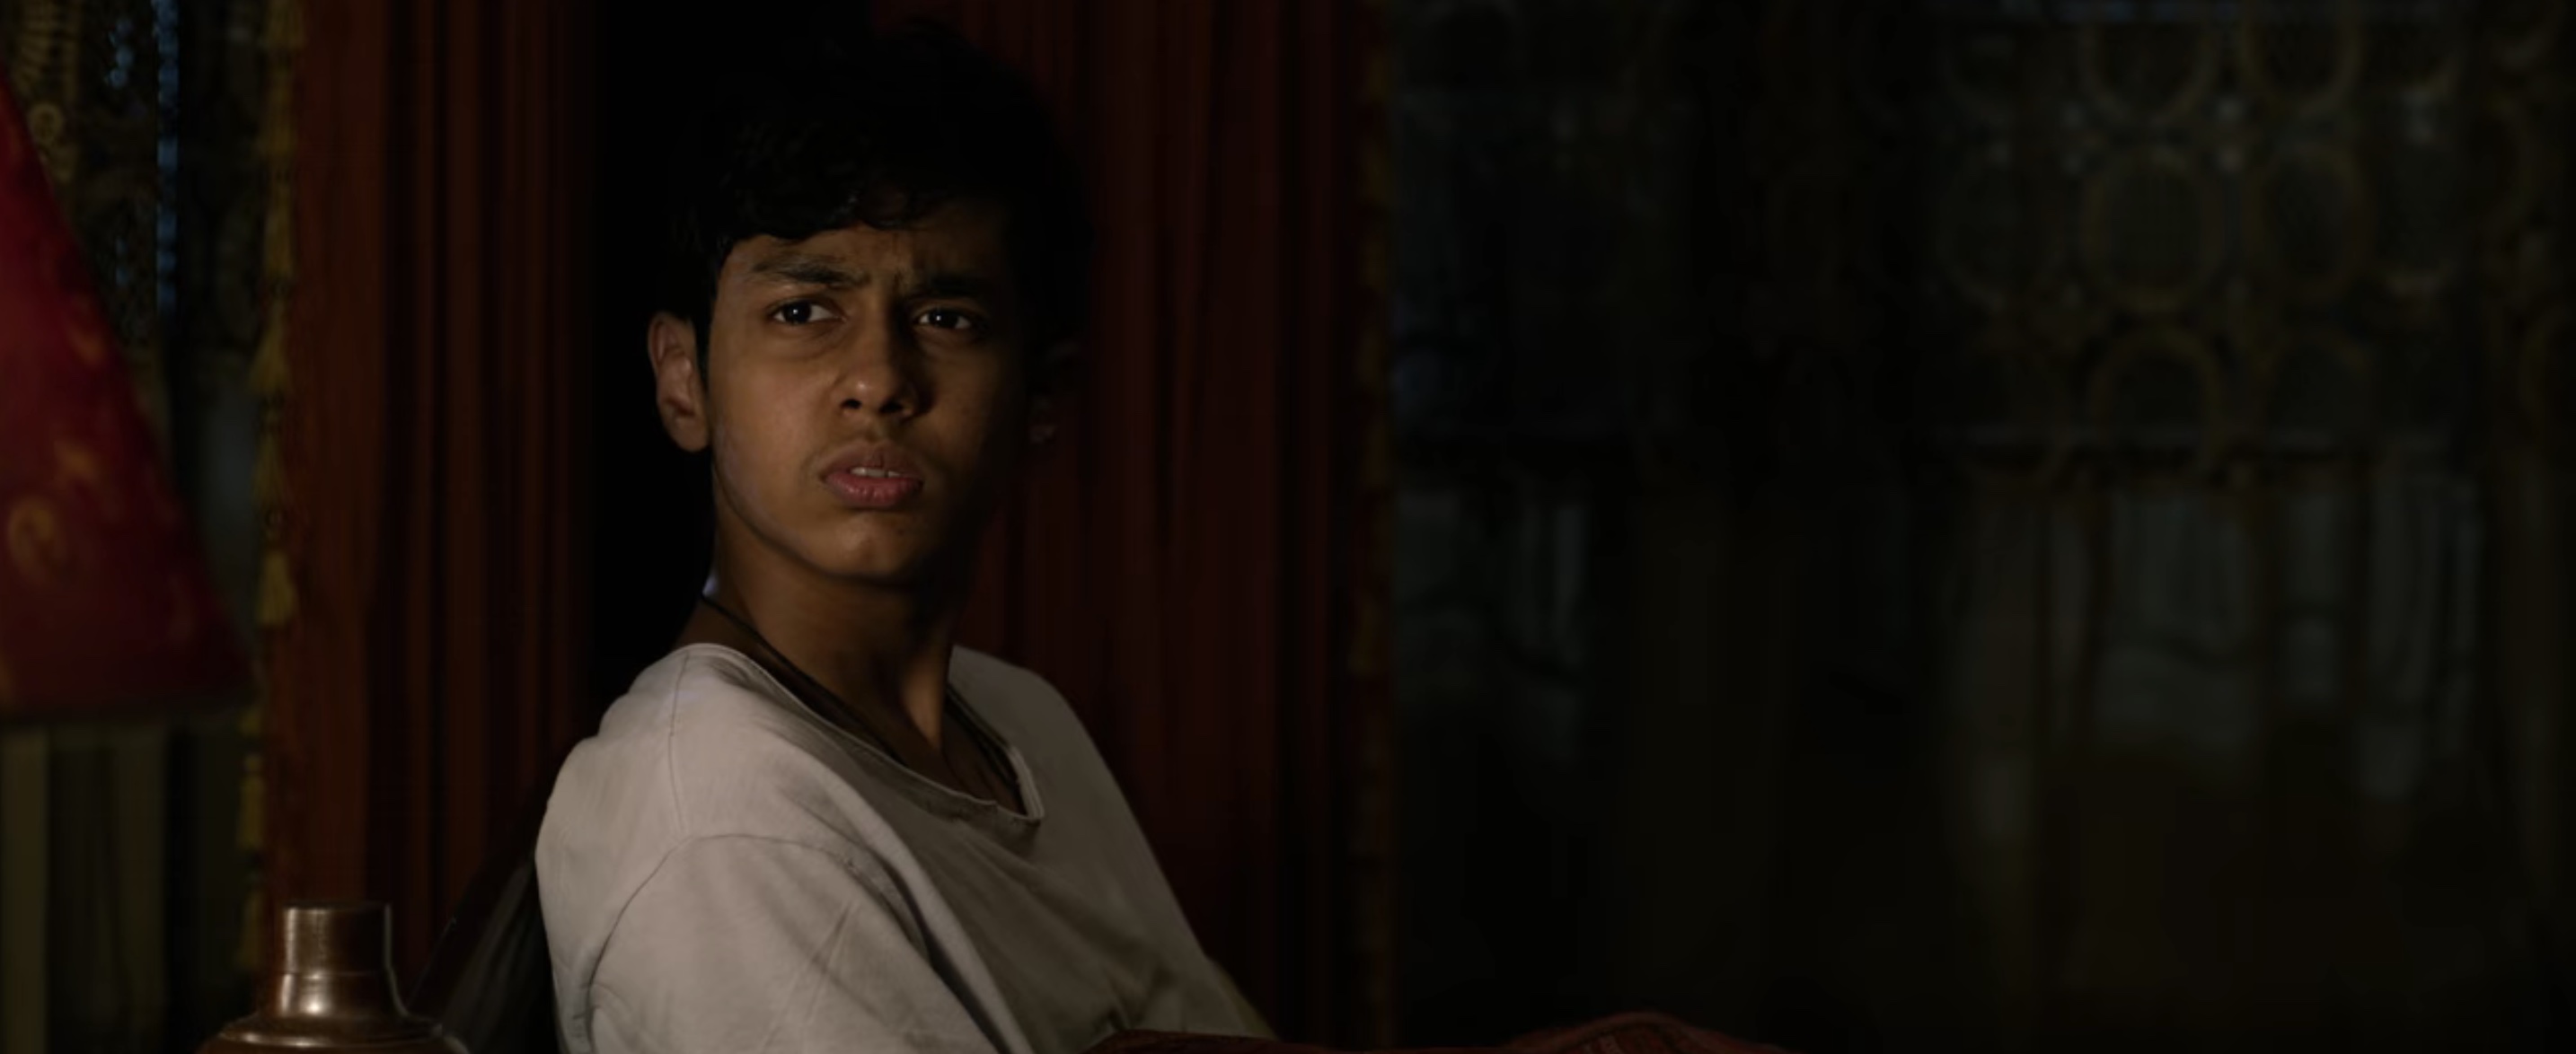 Extraction Cast on Netflix - Rudhraksh Jaiswal as Ovi Mahajan